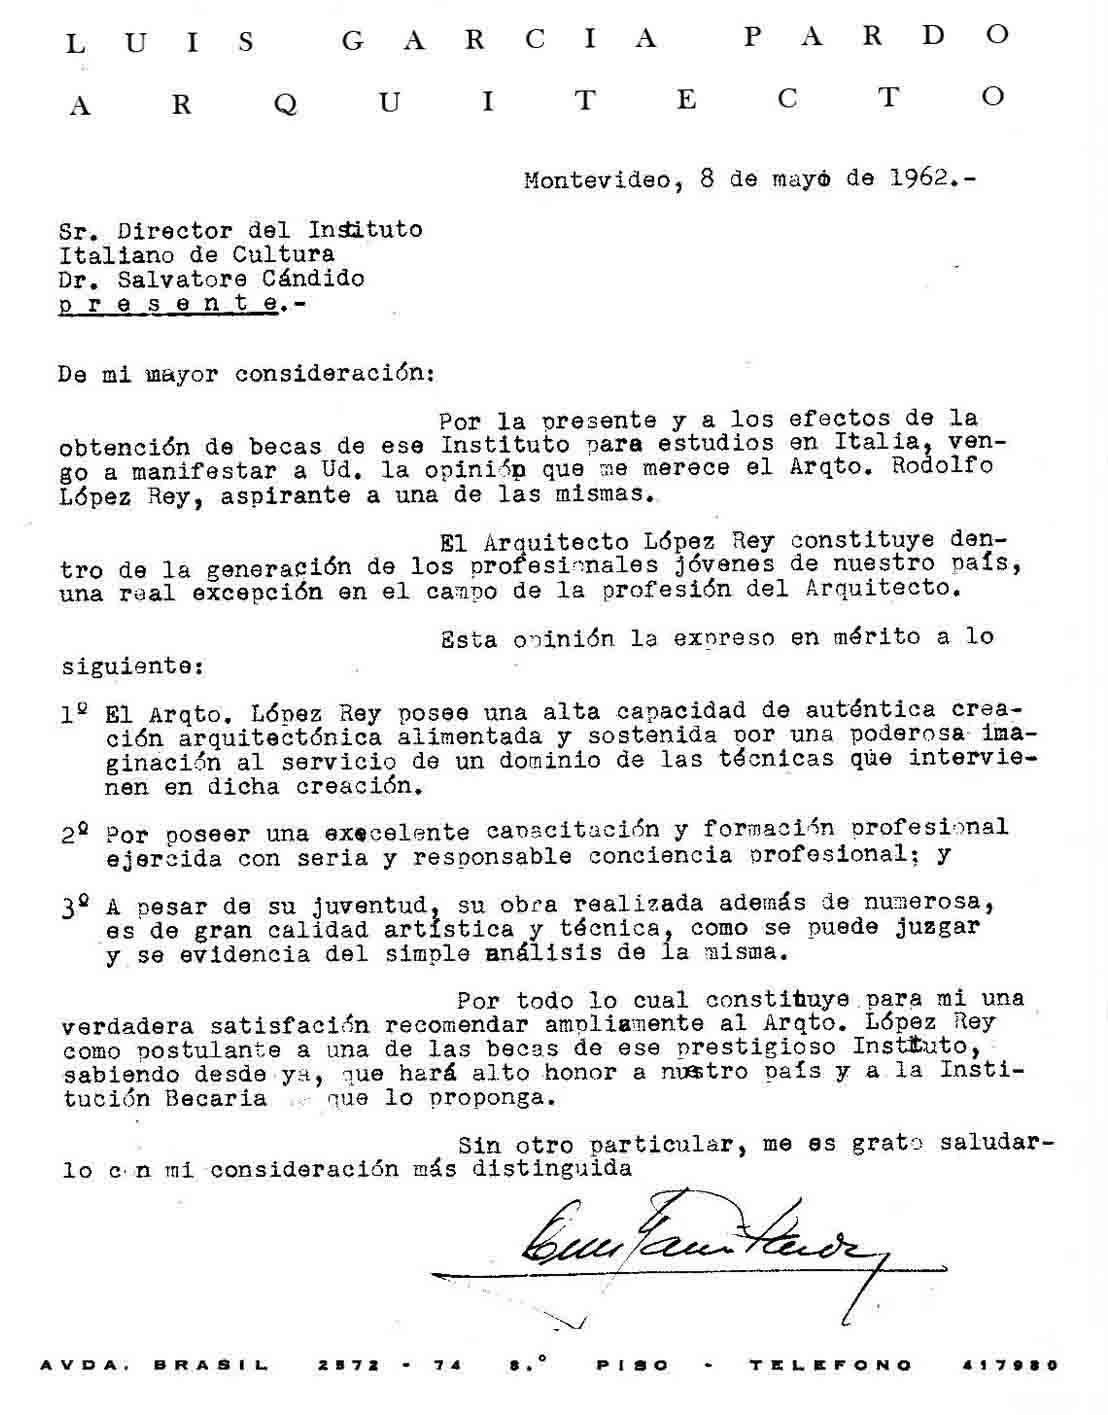 Letter from Arq. Luis García Pardo